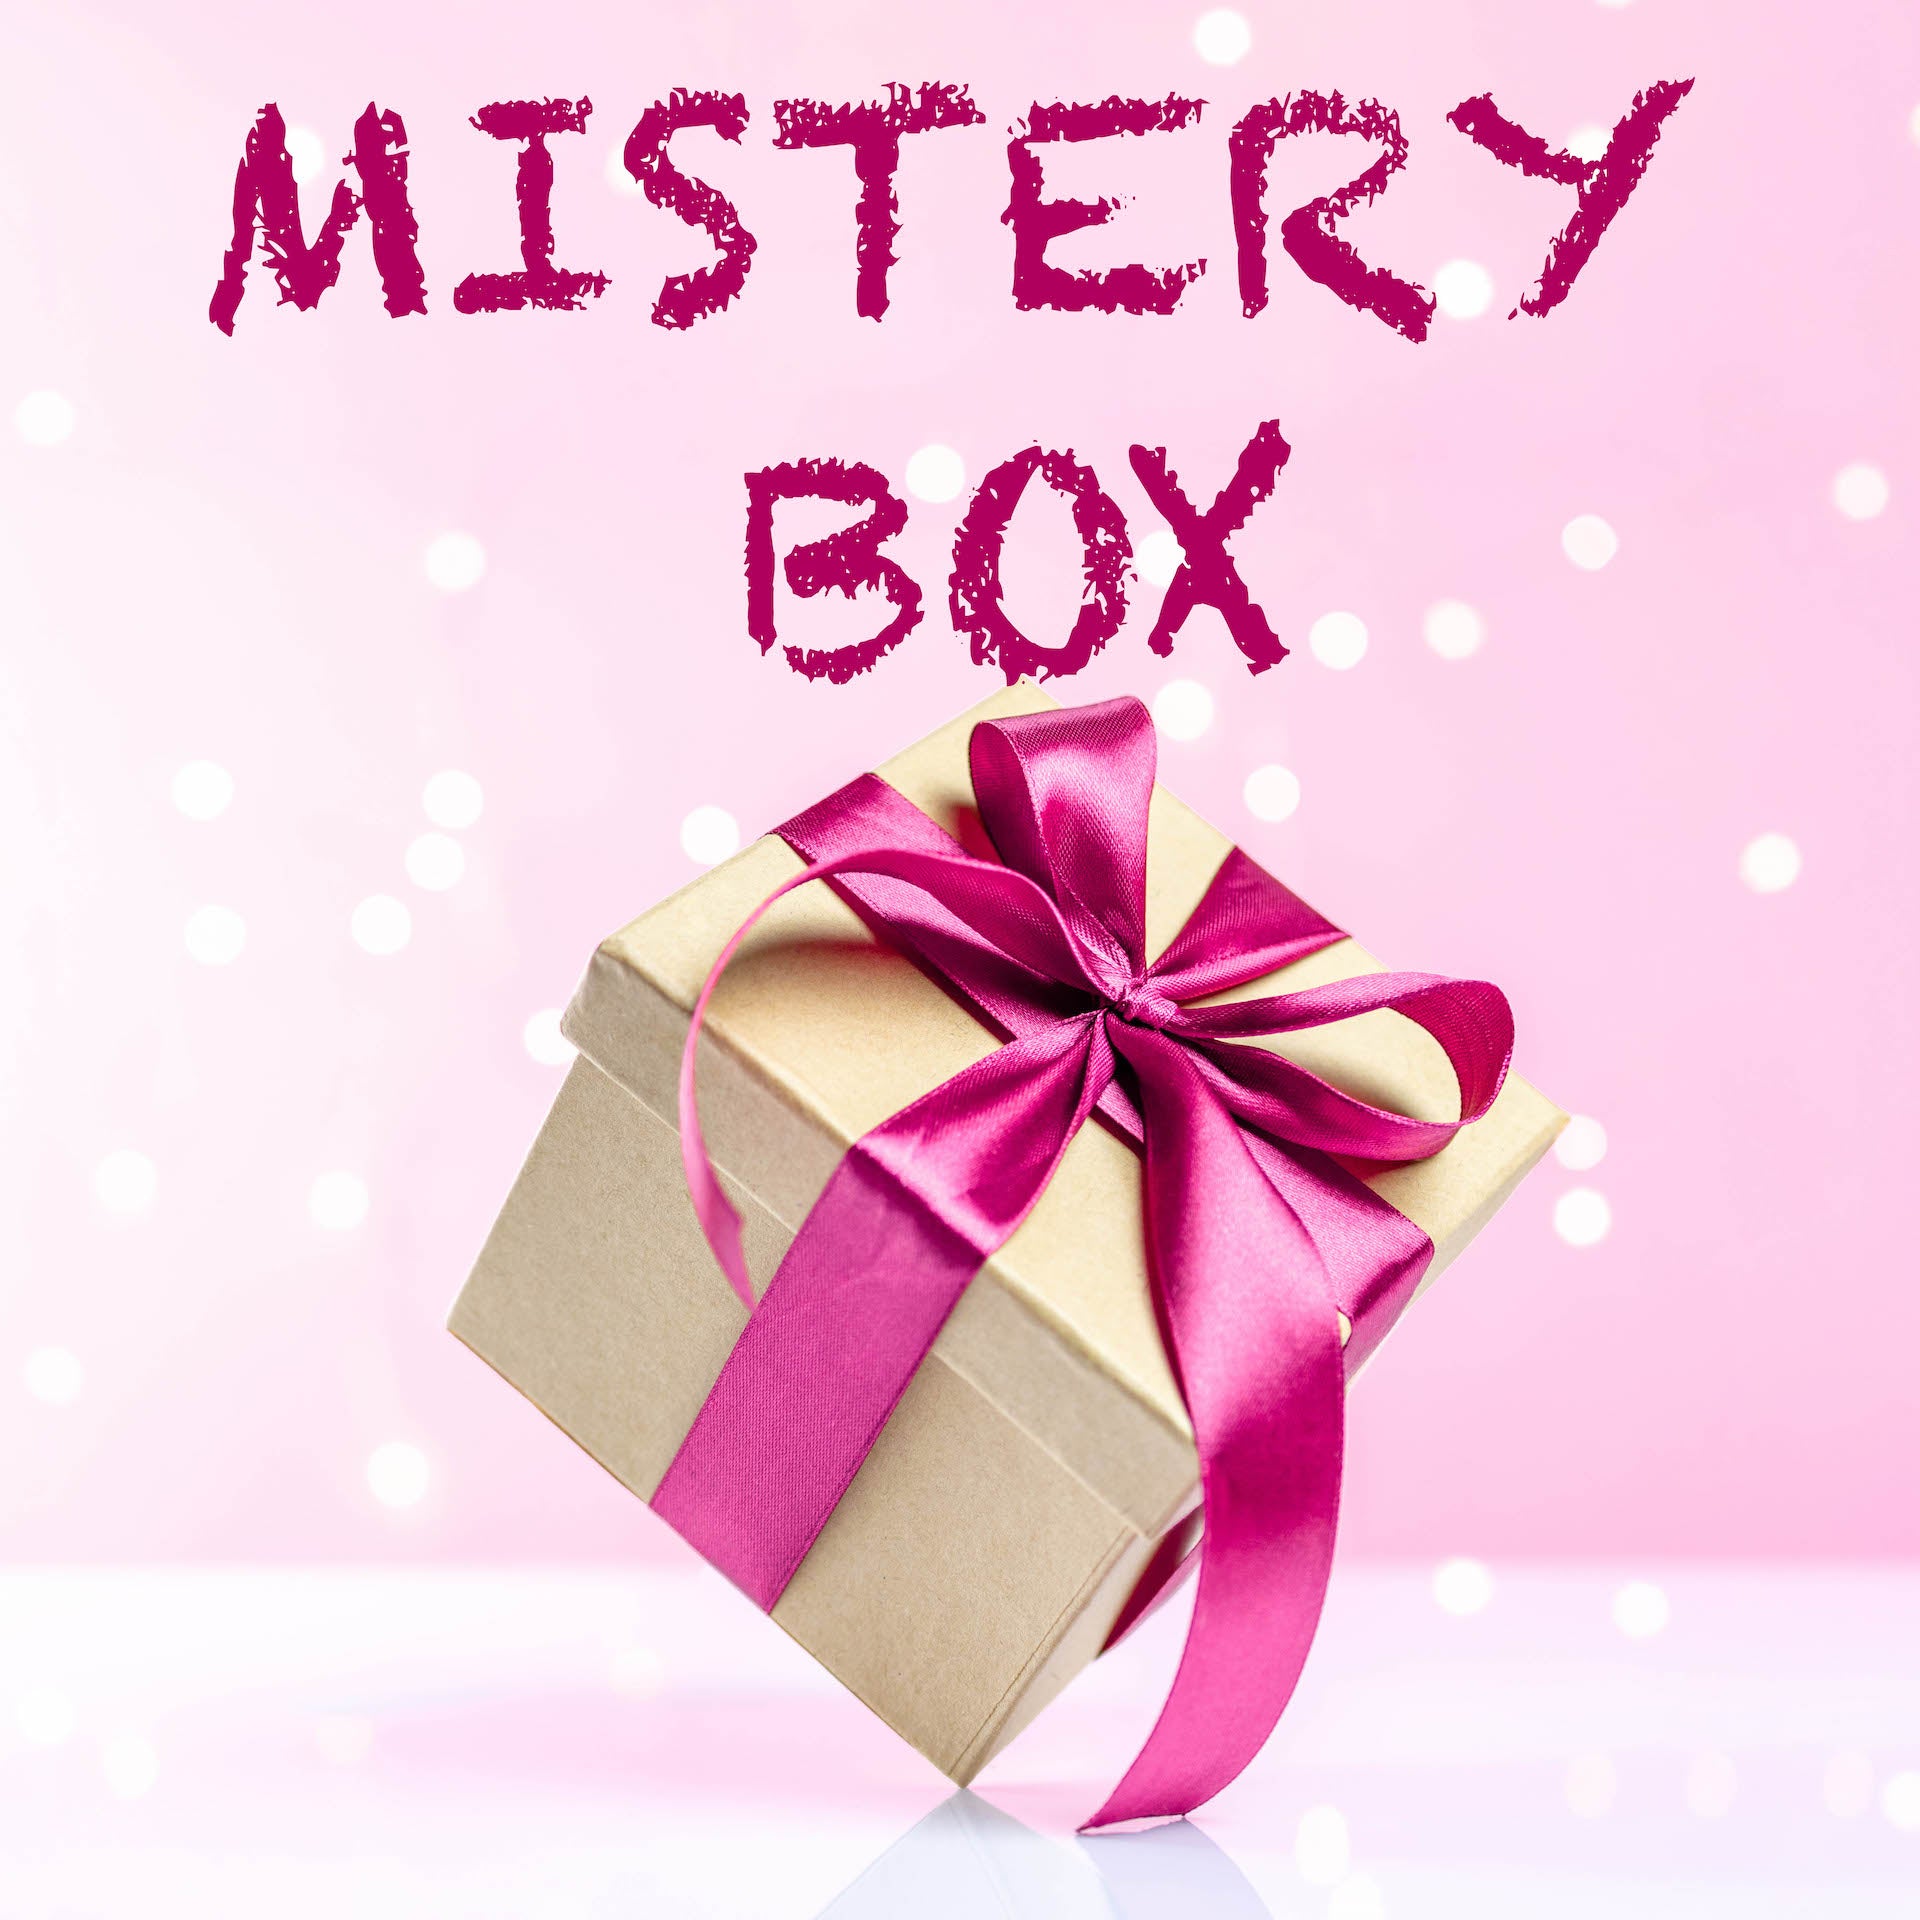 Mistery Box NuvoleBlu (senza questionario) - NuvoleBlu